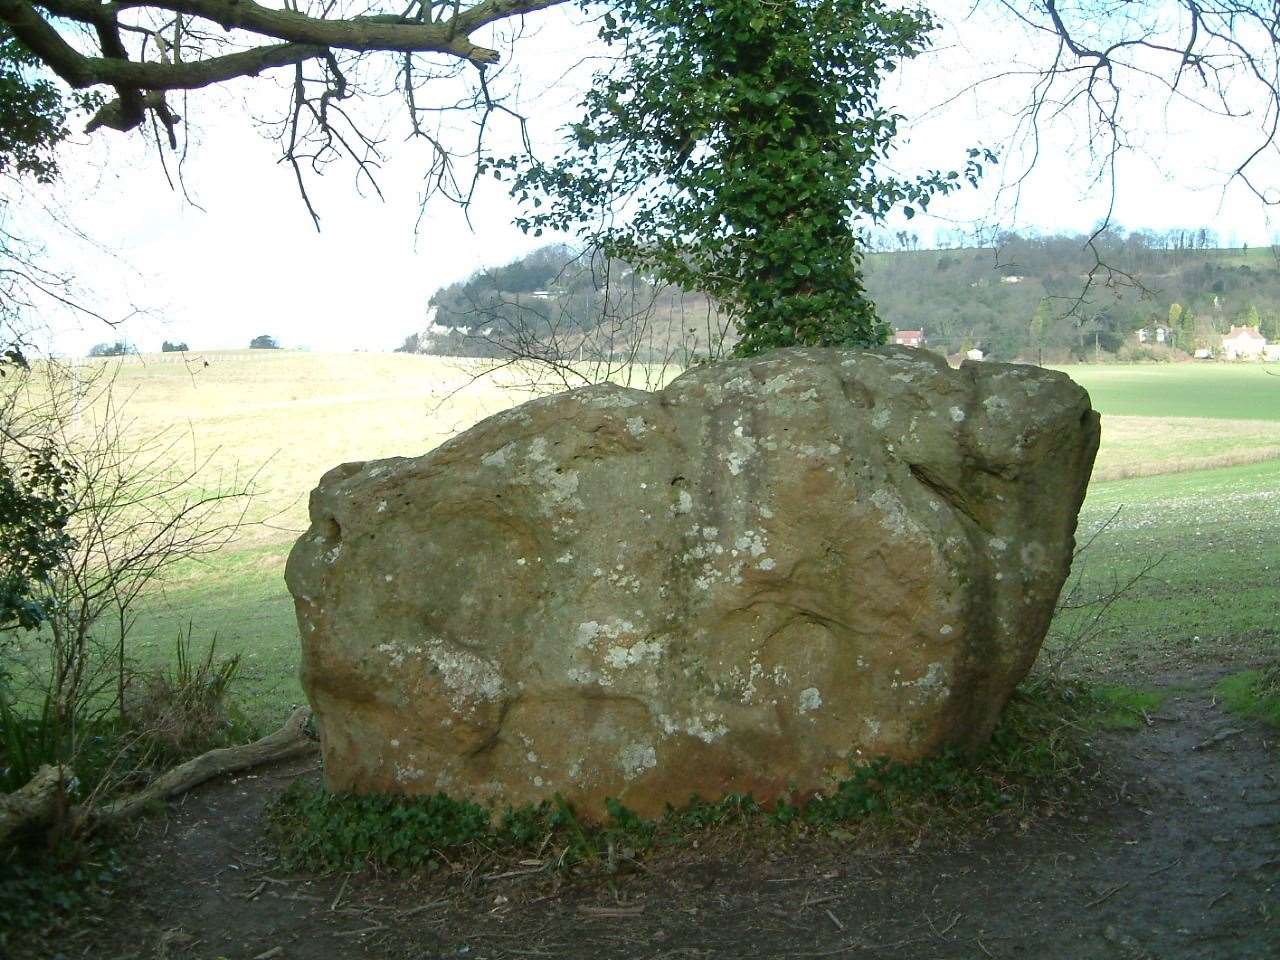 The White Horse Stone